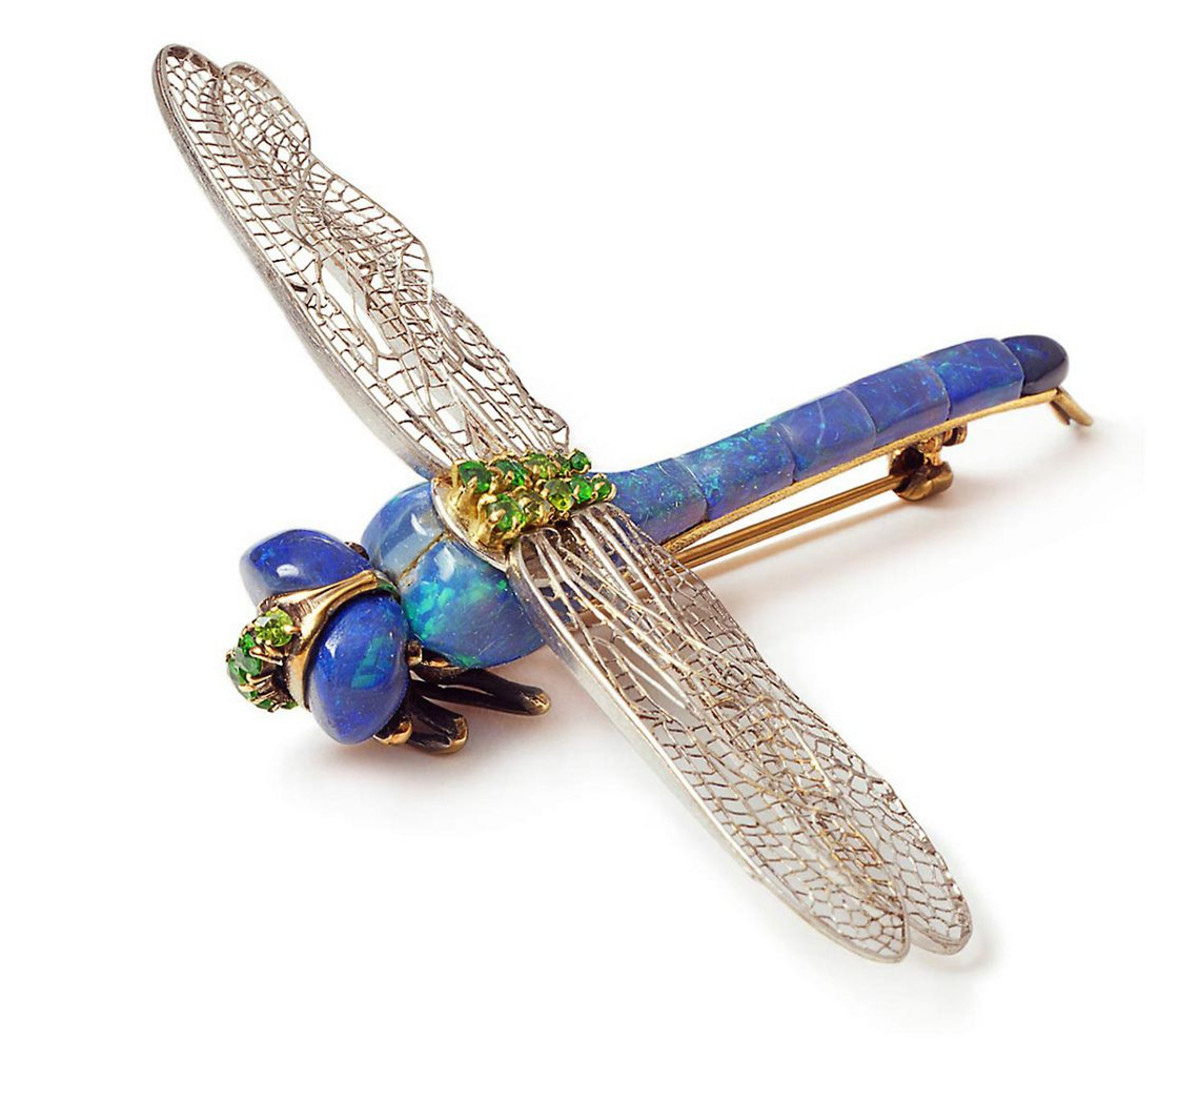 Dragonflies Enchanted Art Nouveau Jewelry Designers - Antique Trader